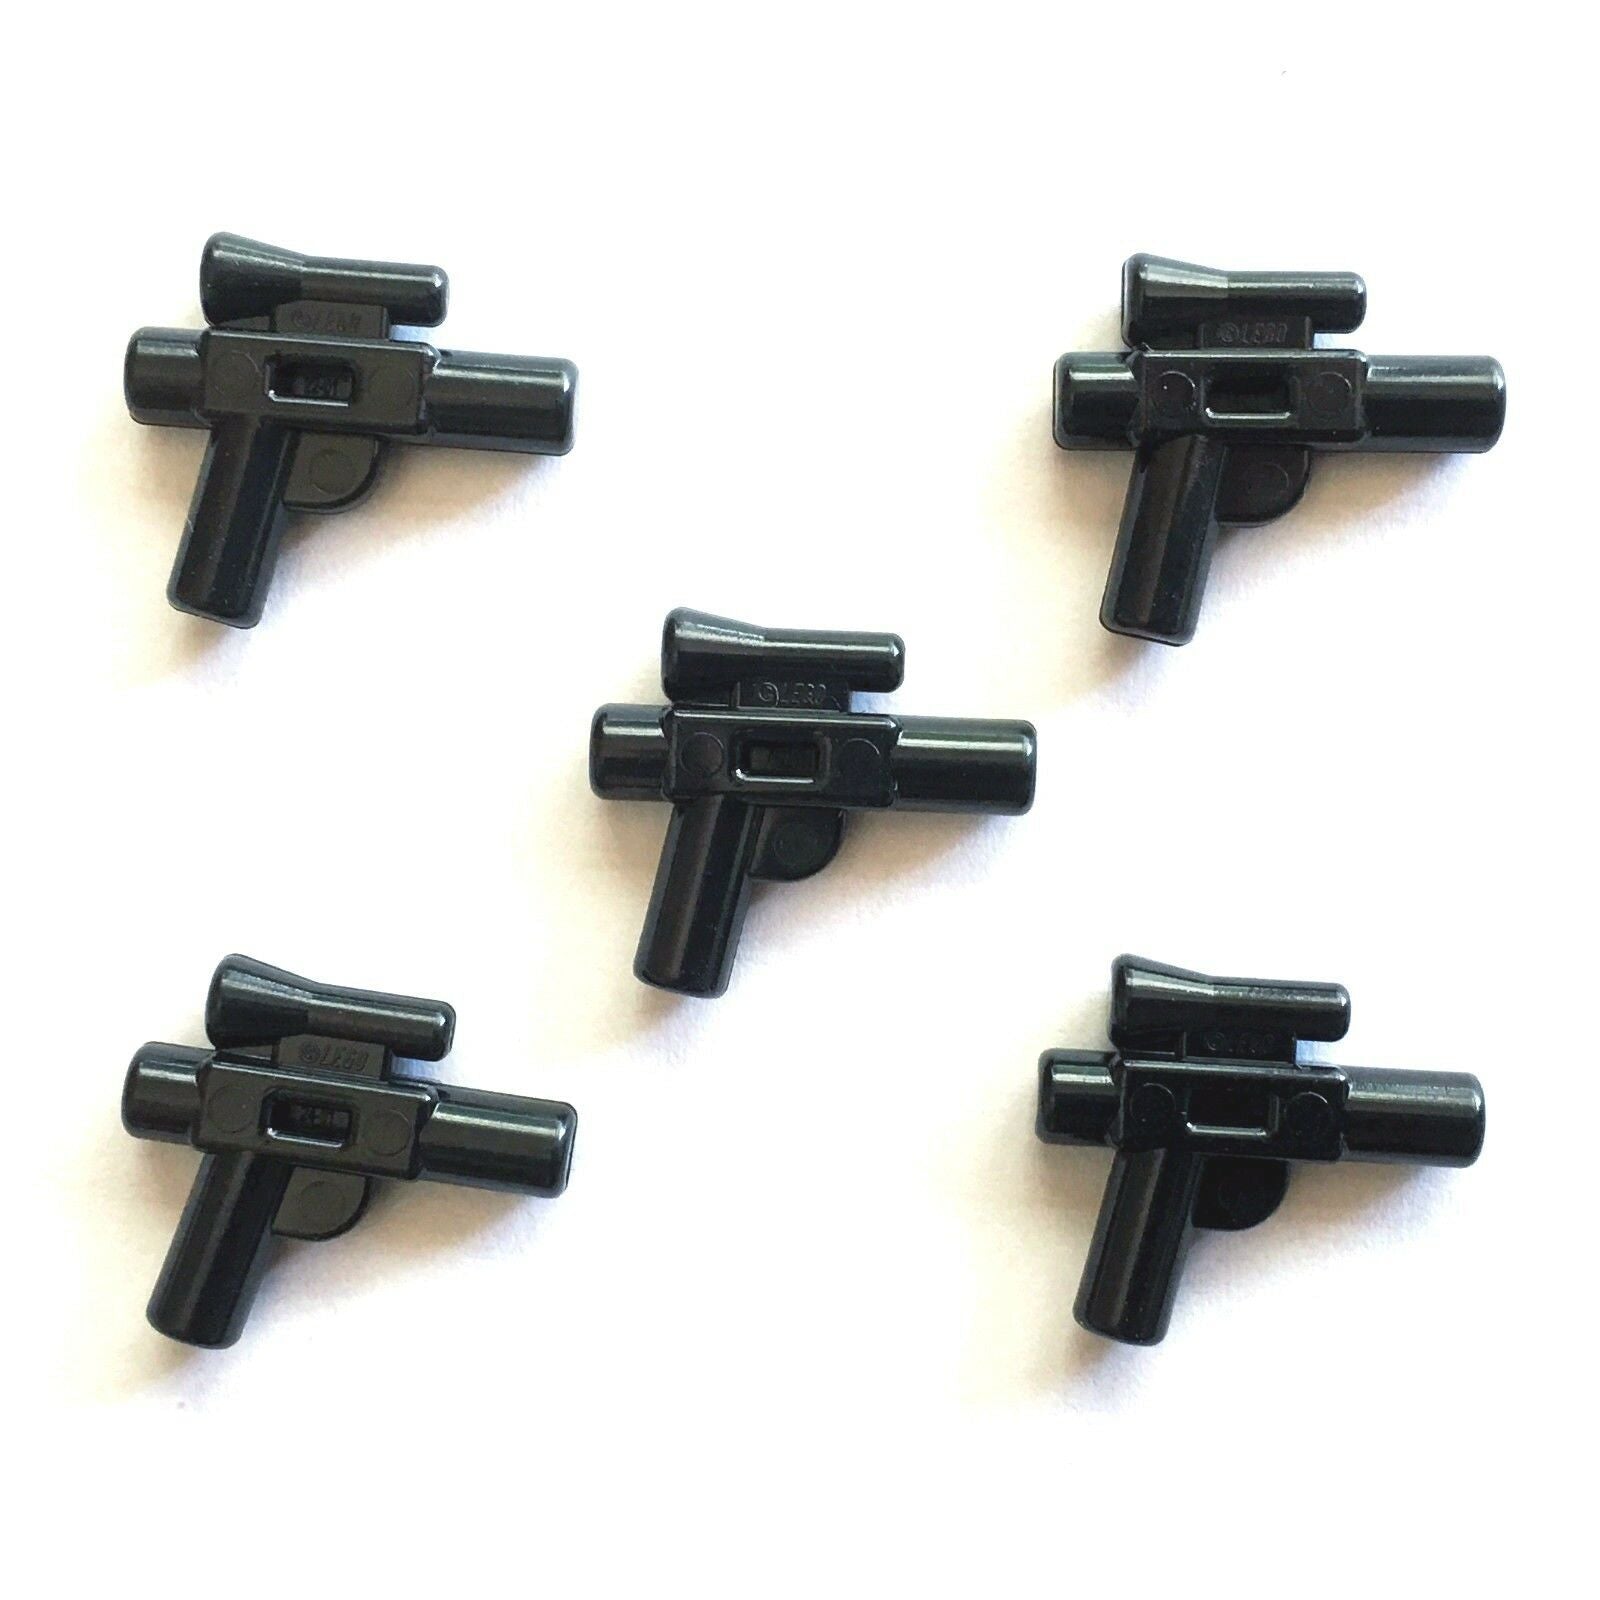 5 x STAR WARS lego BLASTER GUN SMALL five battle Minifigure weapons clone wars NEW - Bricks & Figures